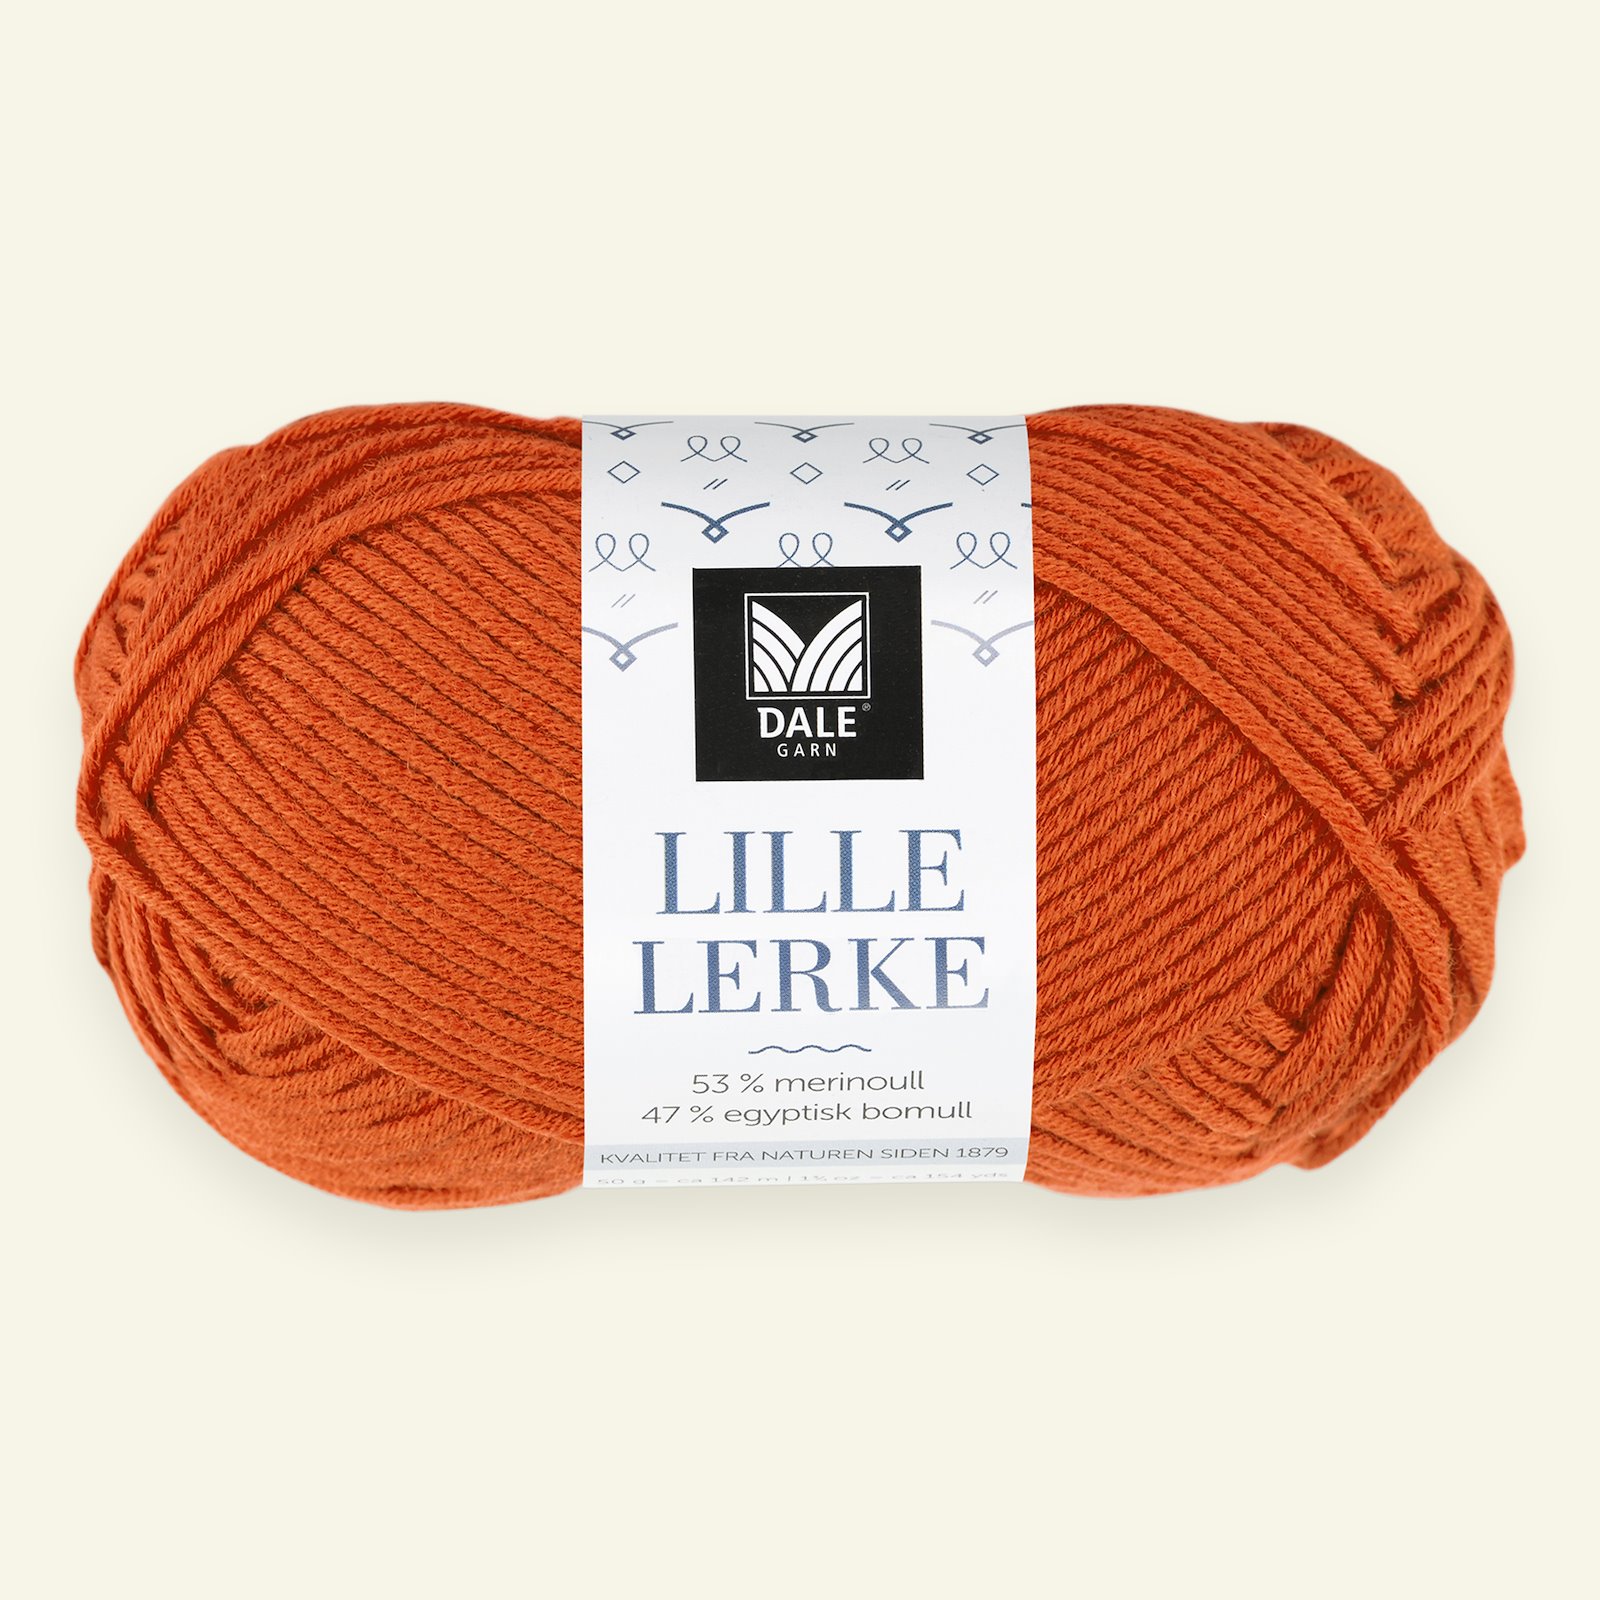 Kritisk sende Biprodukt Dale Garn, merino/cotton yarn "Lille Lerke", orange | Selfmade® /Stoff&Stil